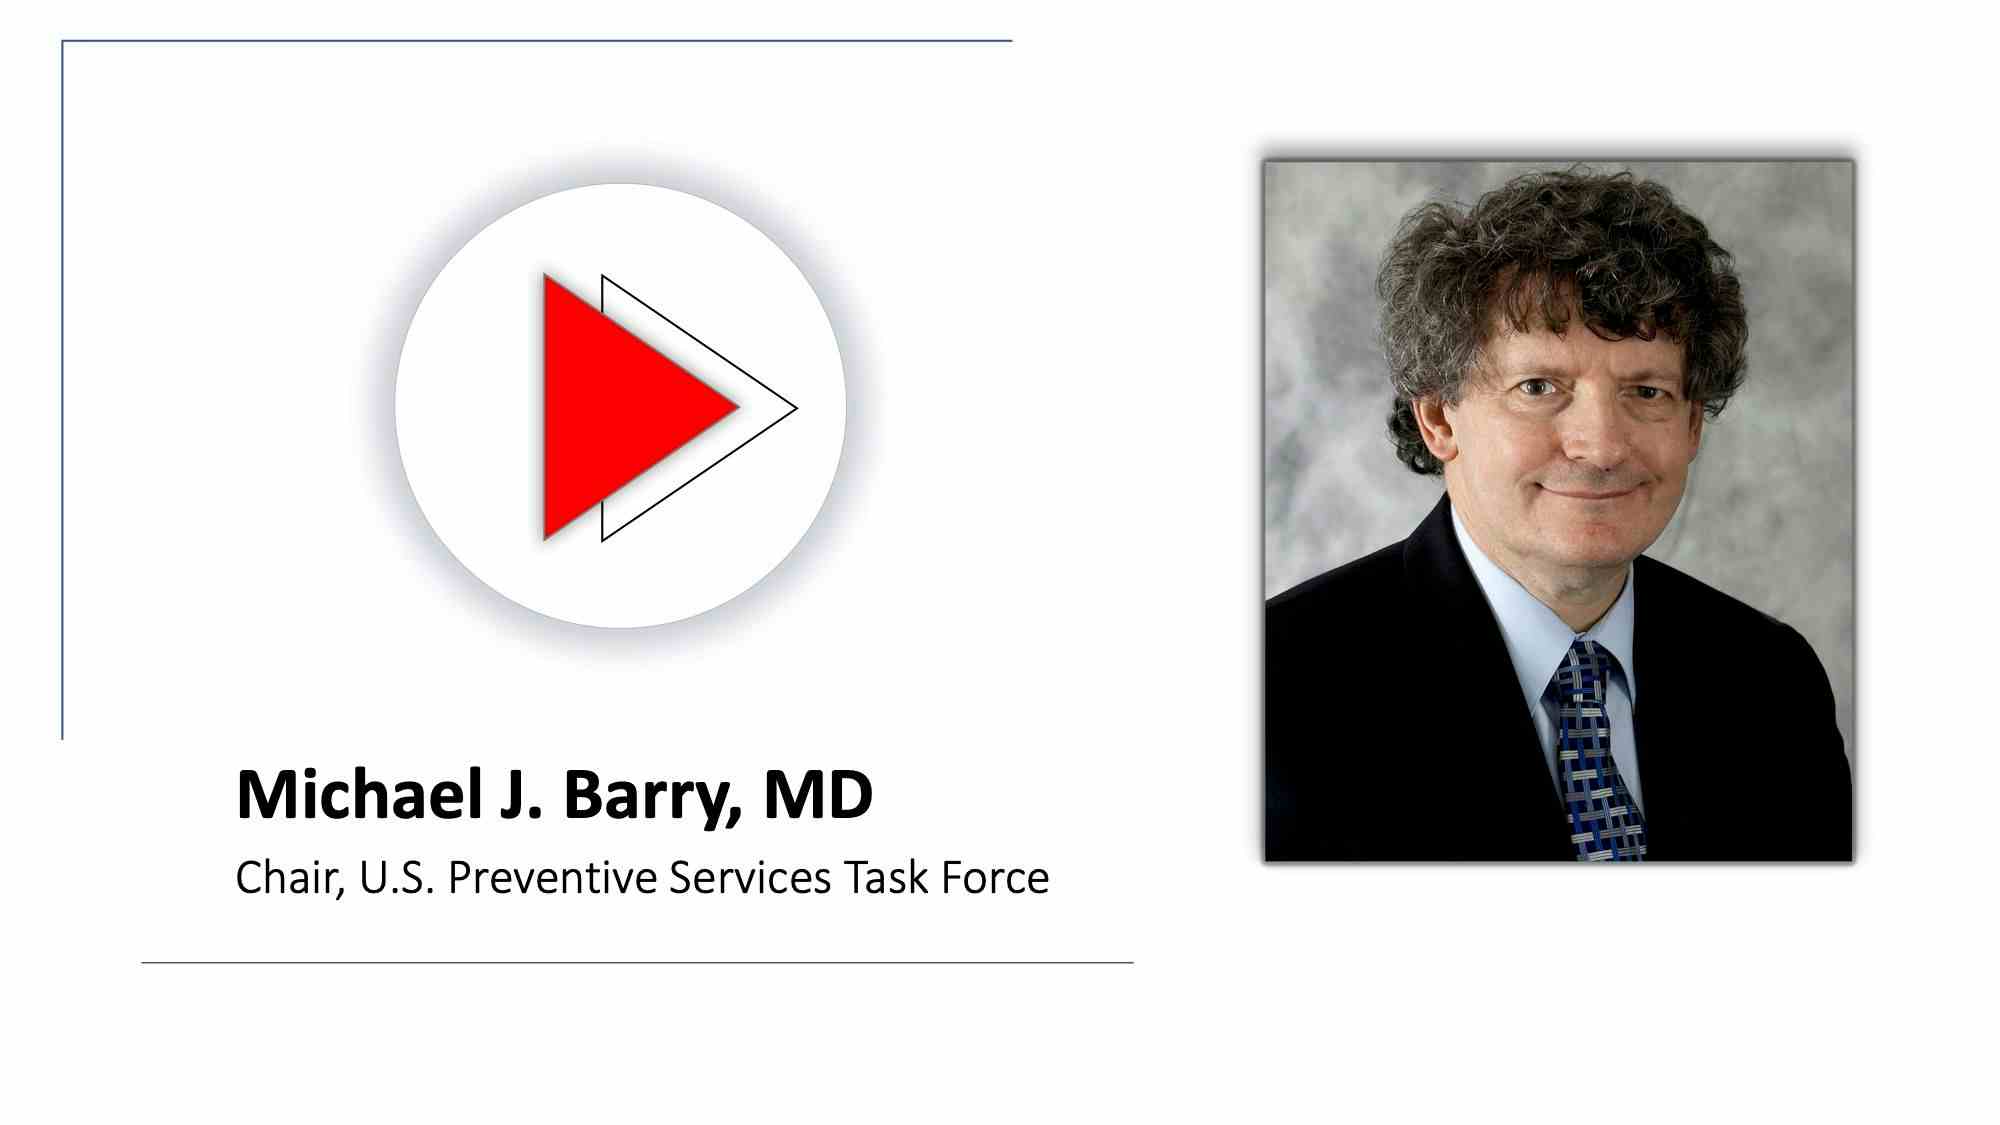 Michael J. Barry, MD